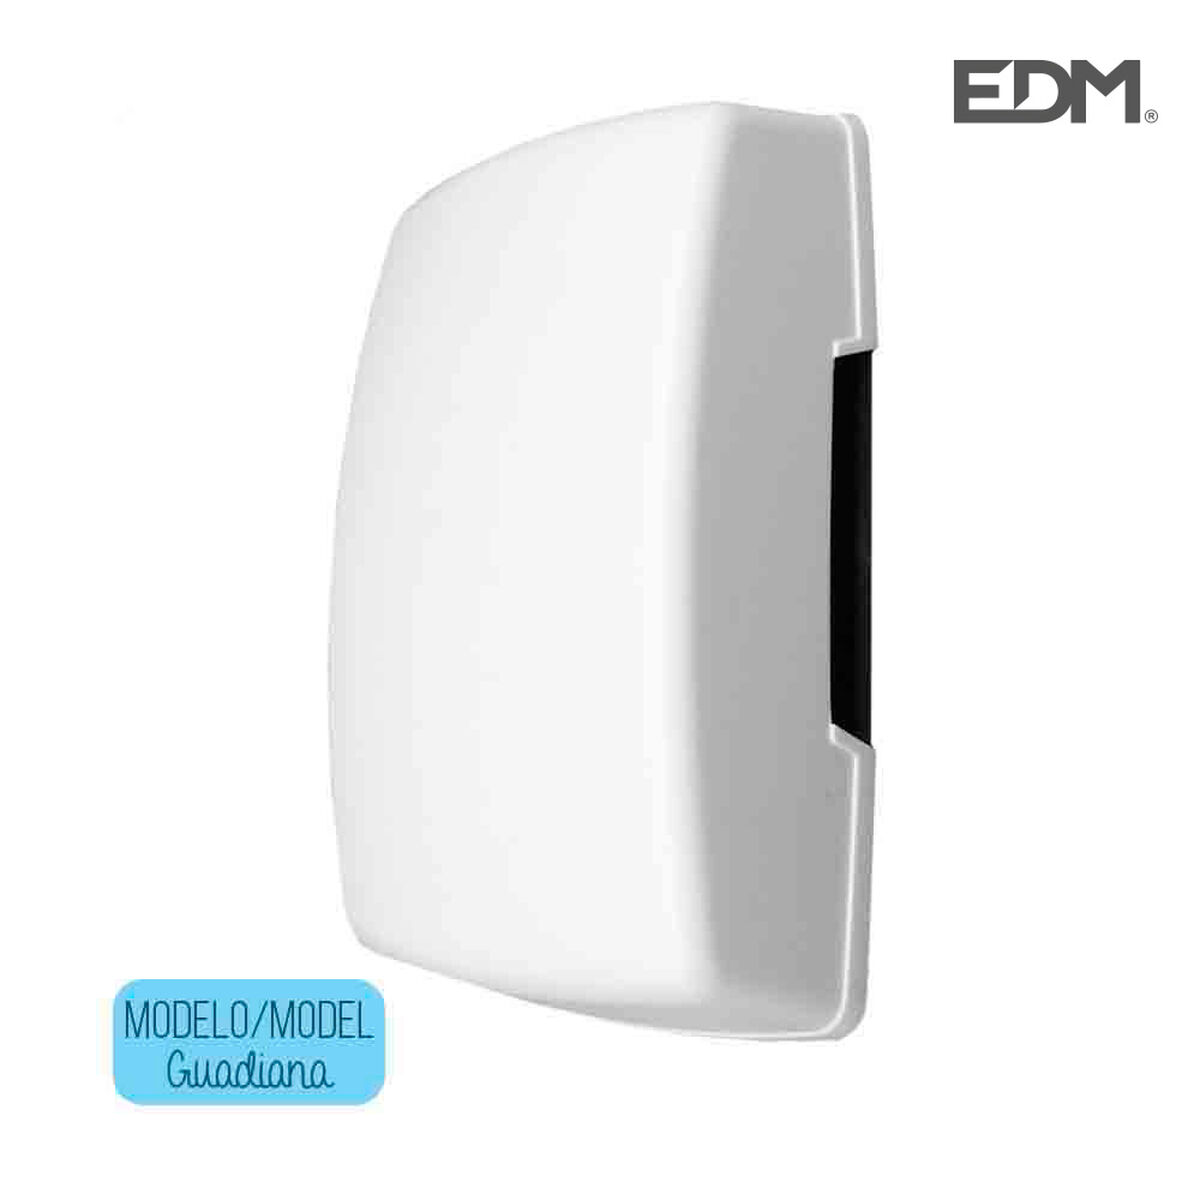 Citofono EDM Guadiana 80 dB 13,5 x 7,9 x 5 cm (110-230 V)